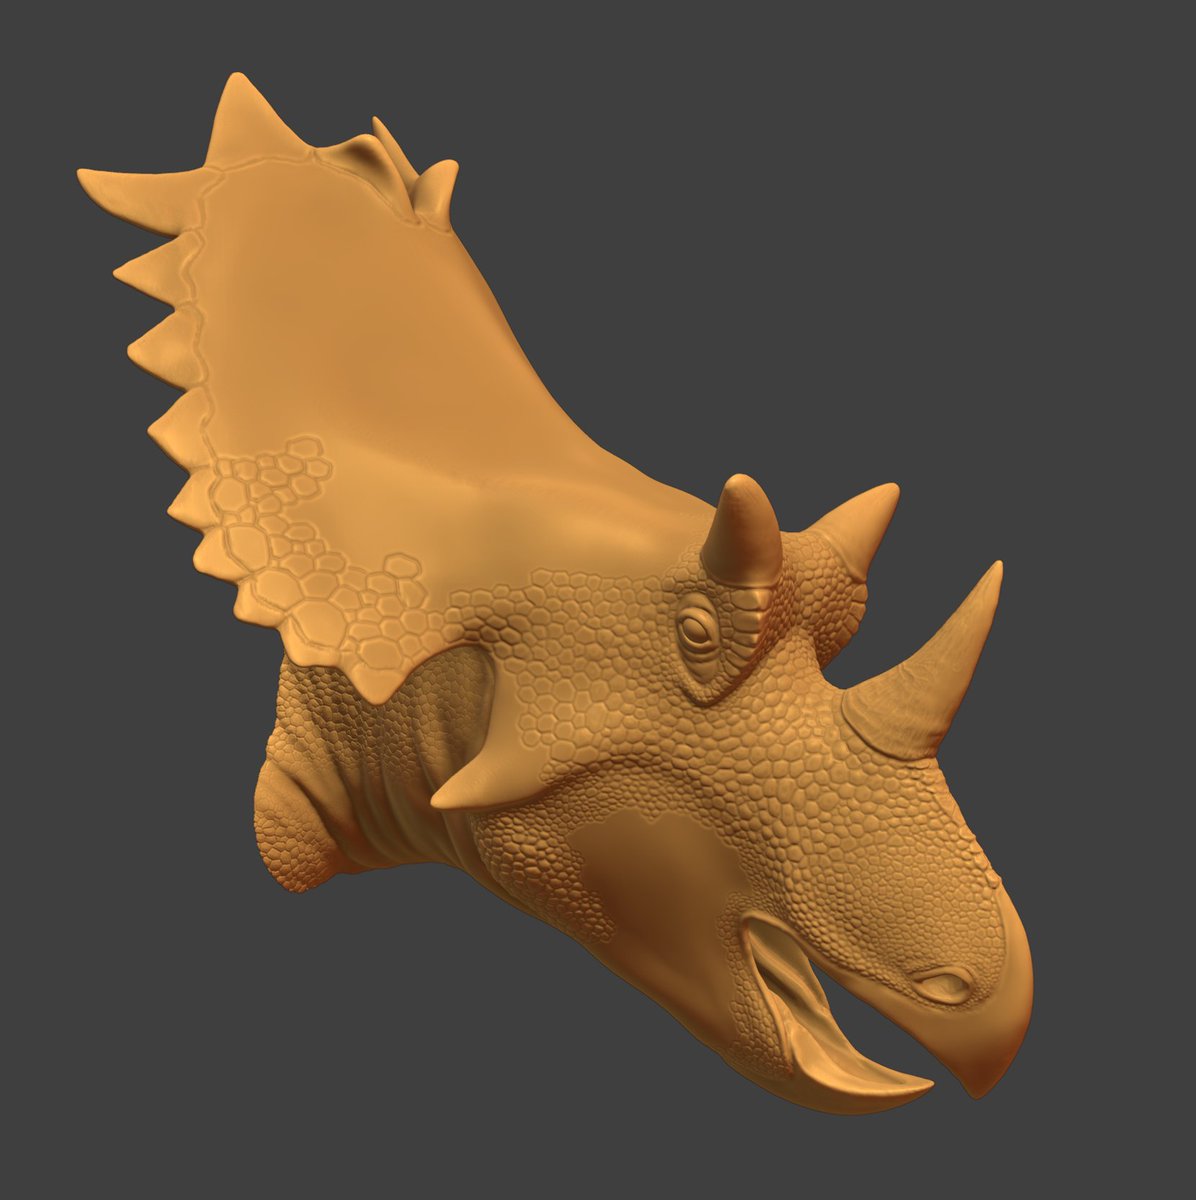 Making some progress on Utahceratops